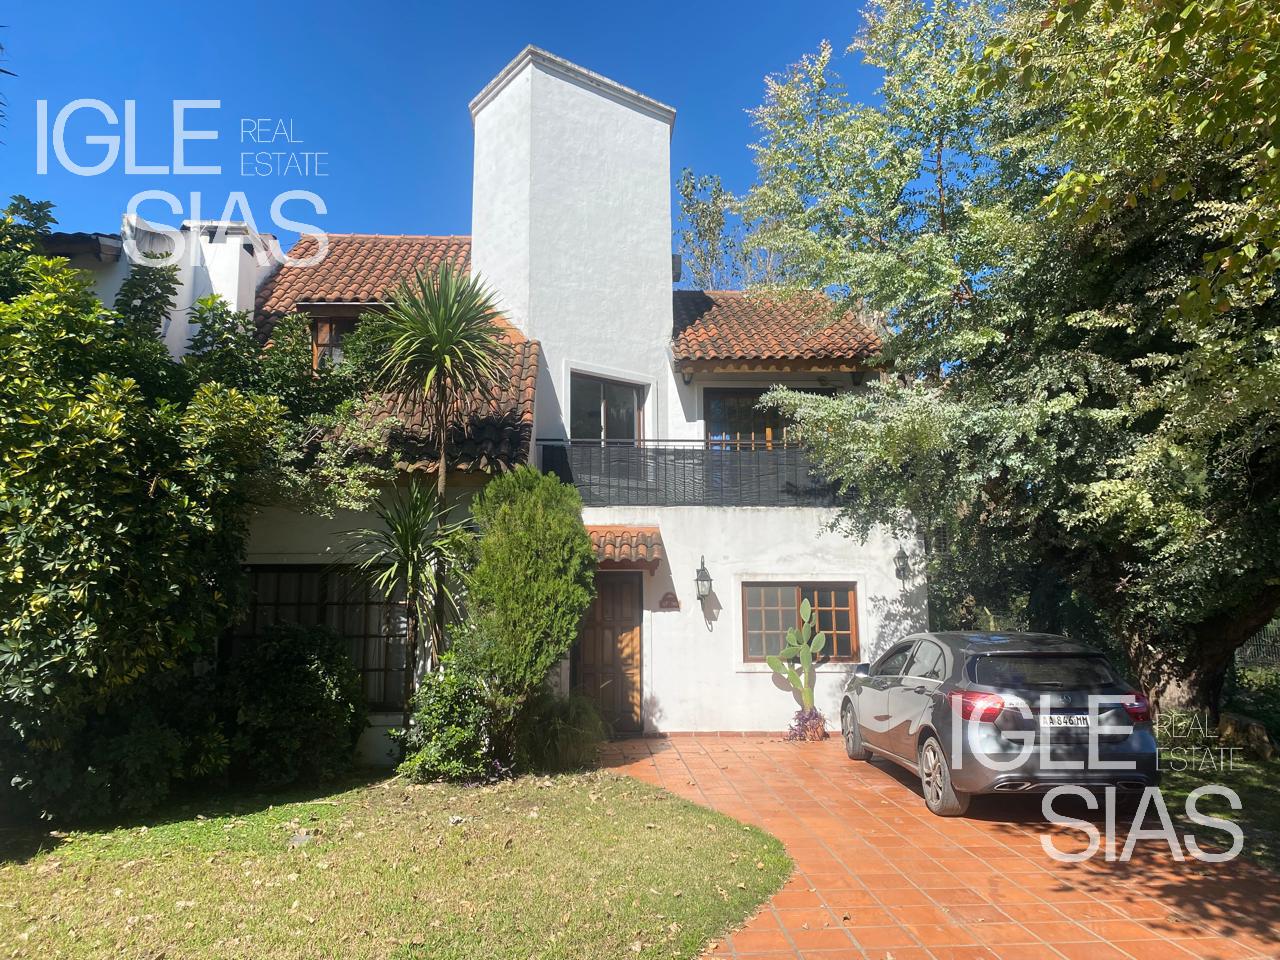 #5070983 | Alquiler | Casa | Aranjuez (Gabriela Iglesias Negocios Inmobiliarias)